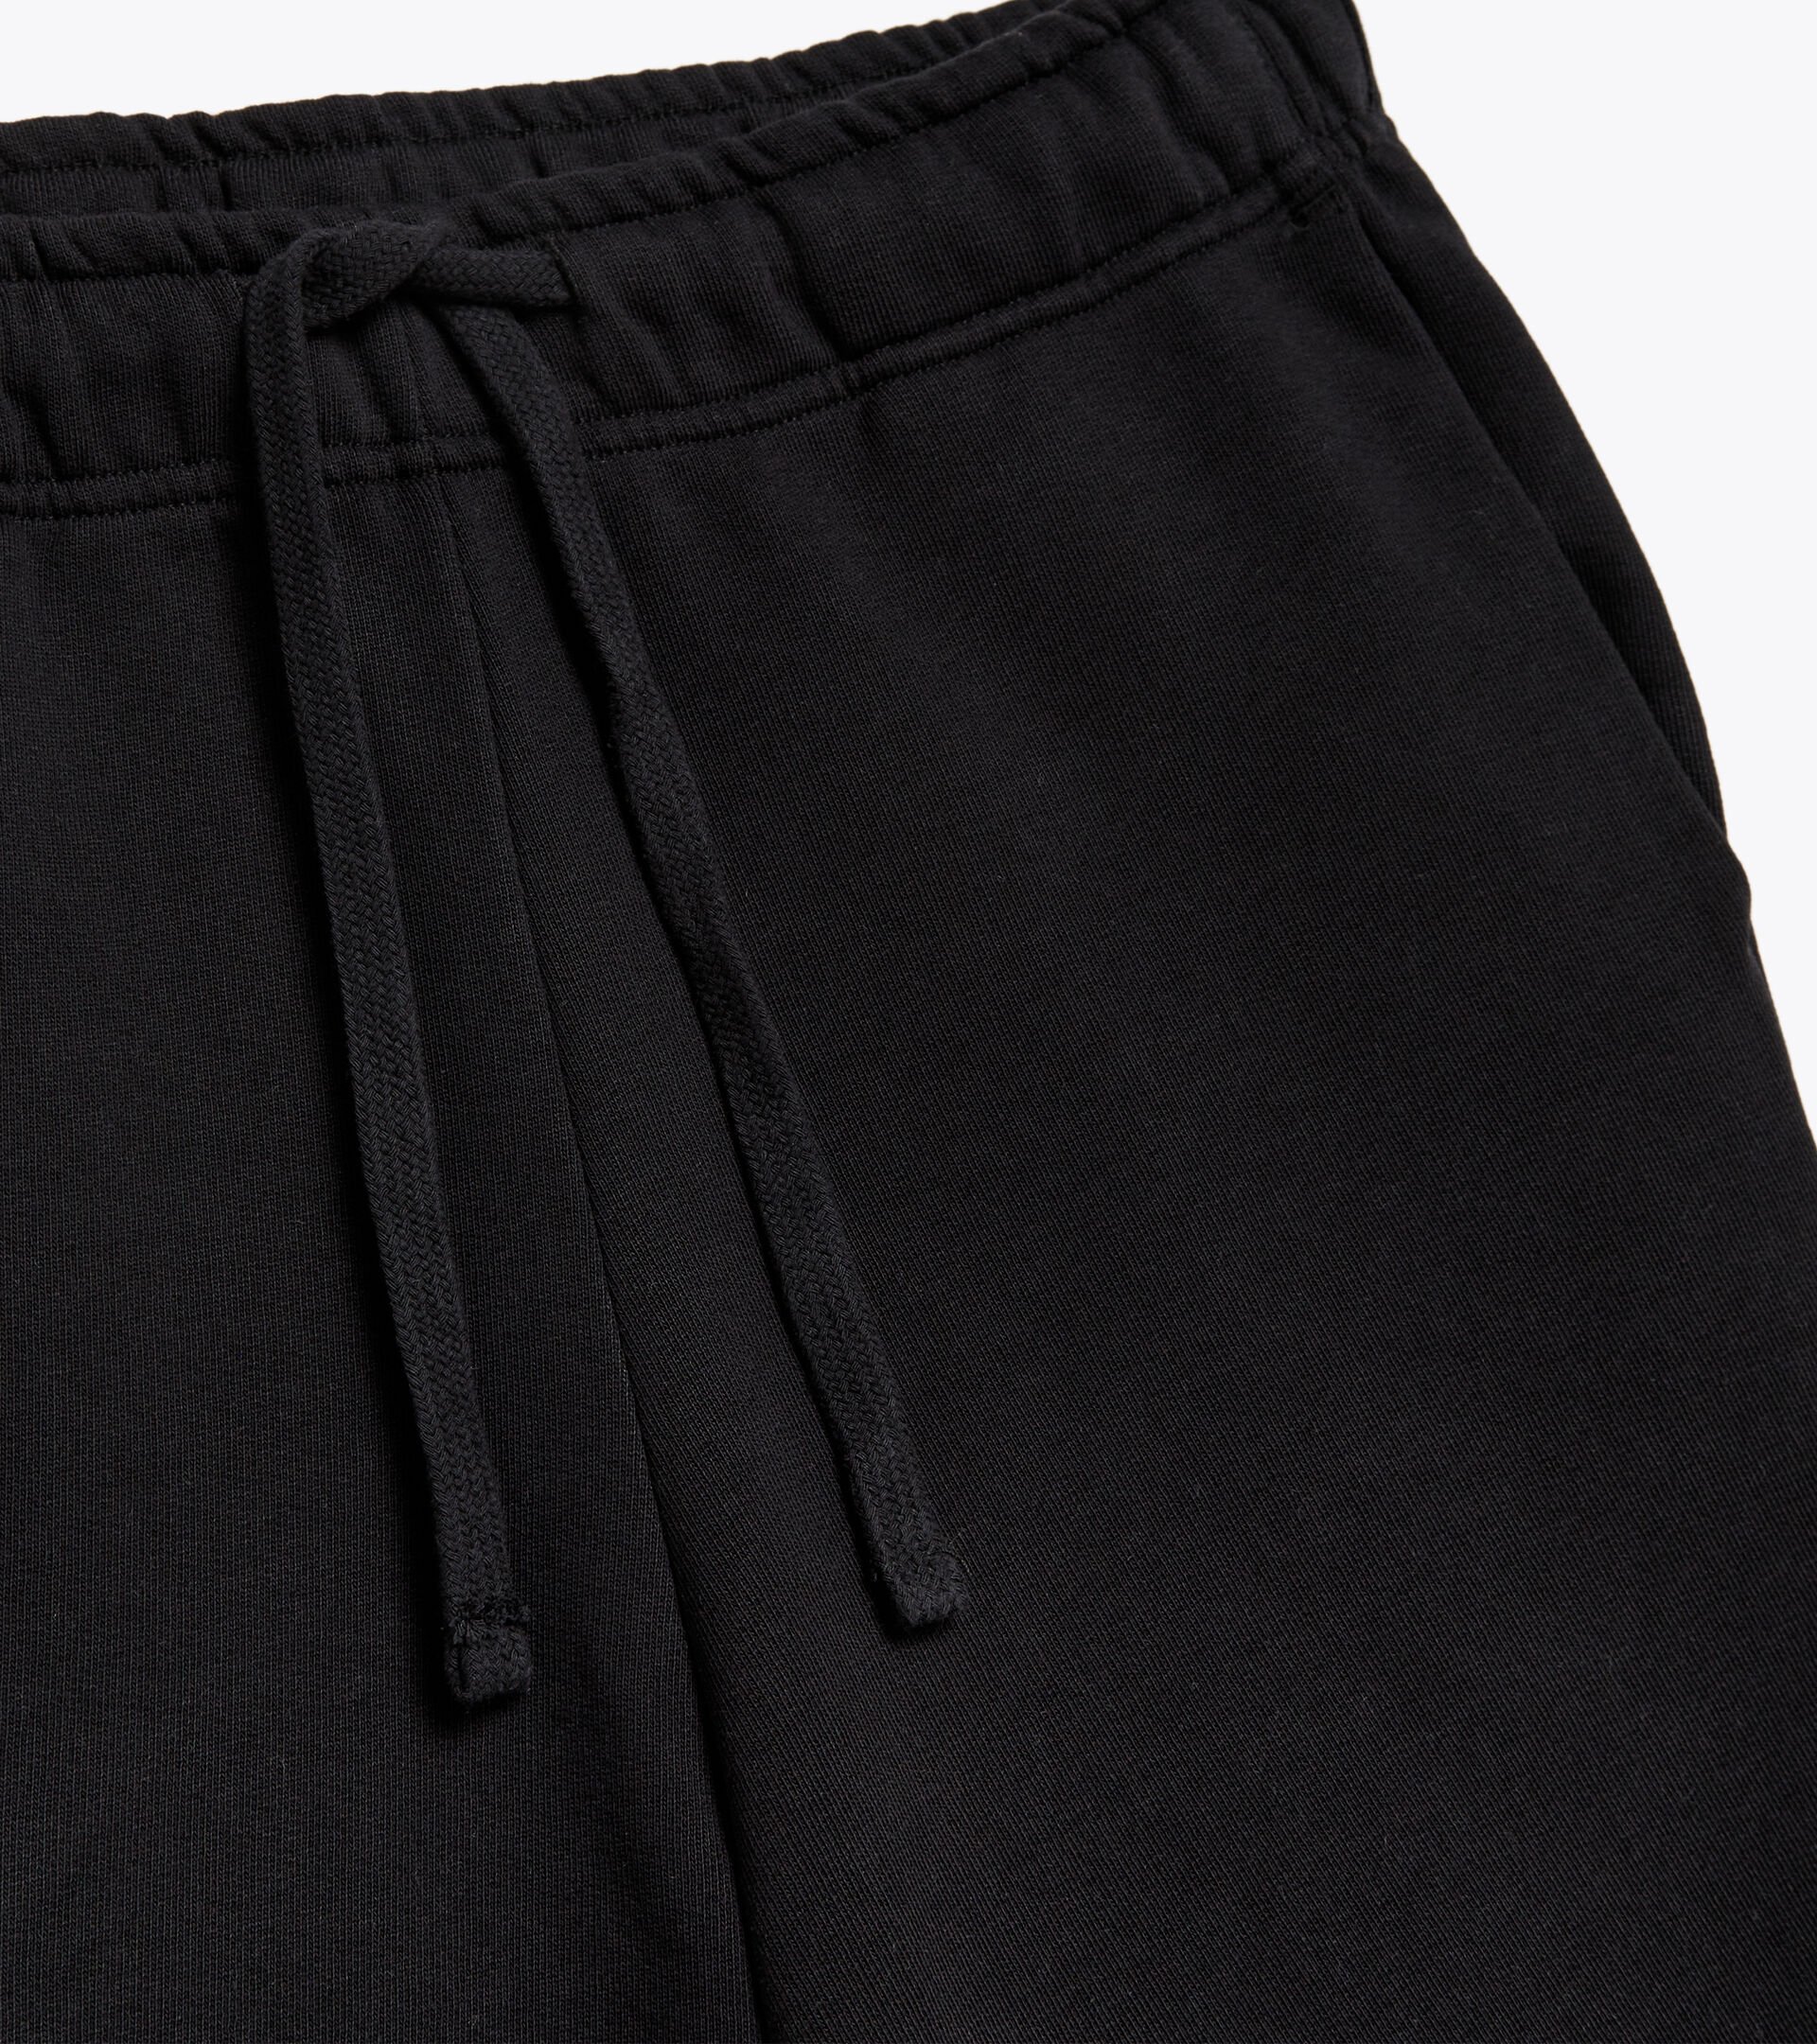 Cotton sweatpants - Gender neutral BERMUDA SPW LOGO BLACK - Diadora